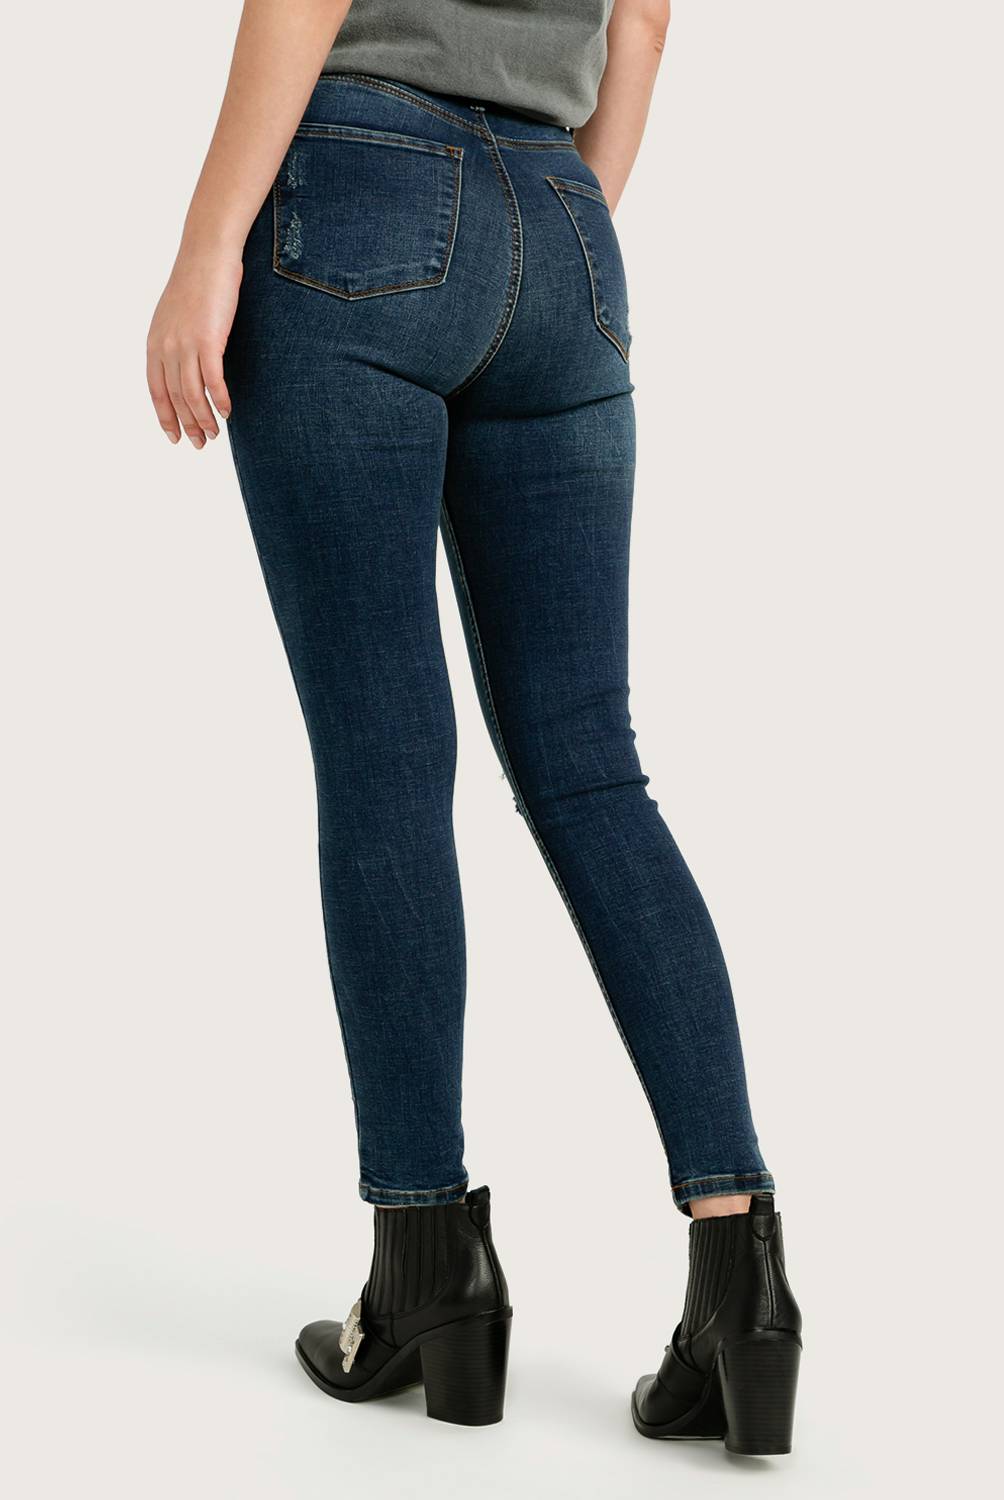 Americanino - Jeans Mujer